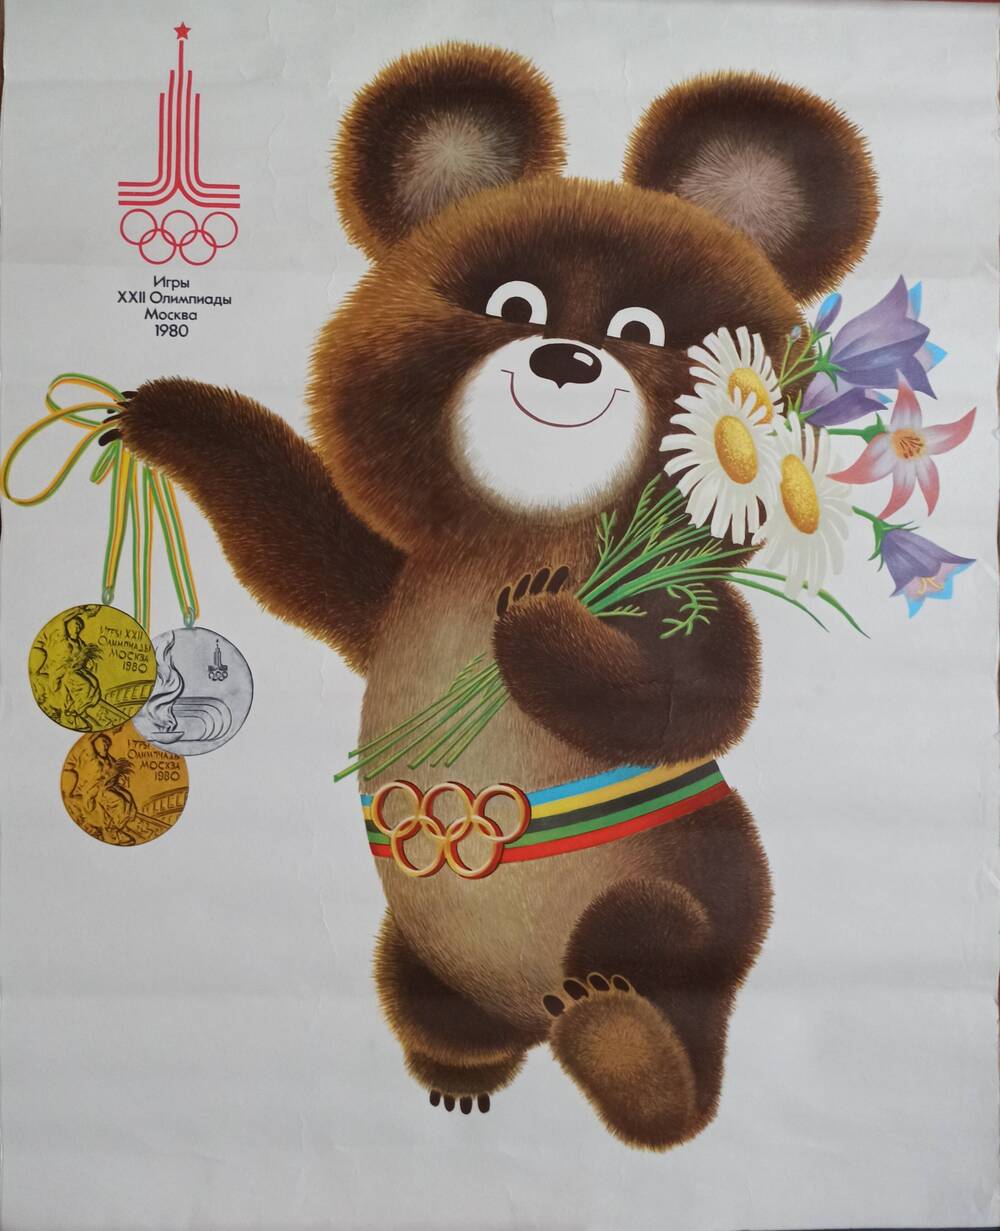 Плакат
«Игры XXII Олимпиады. Москва, 1980»